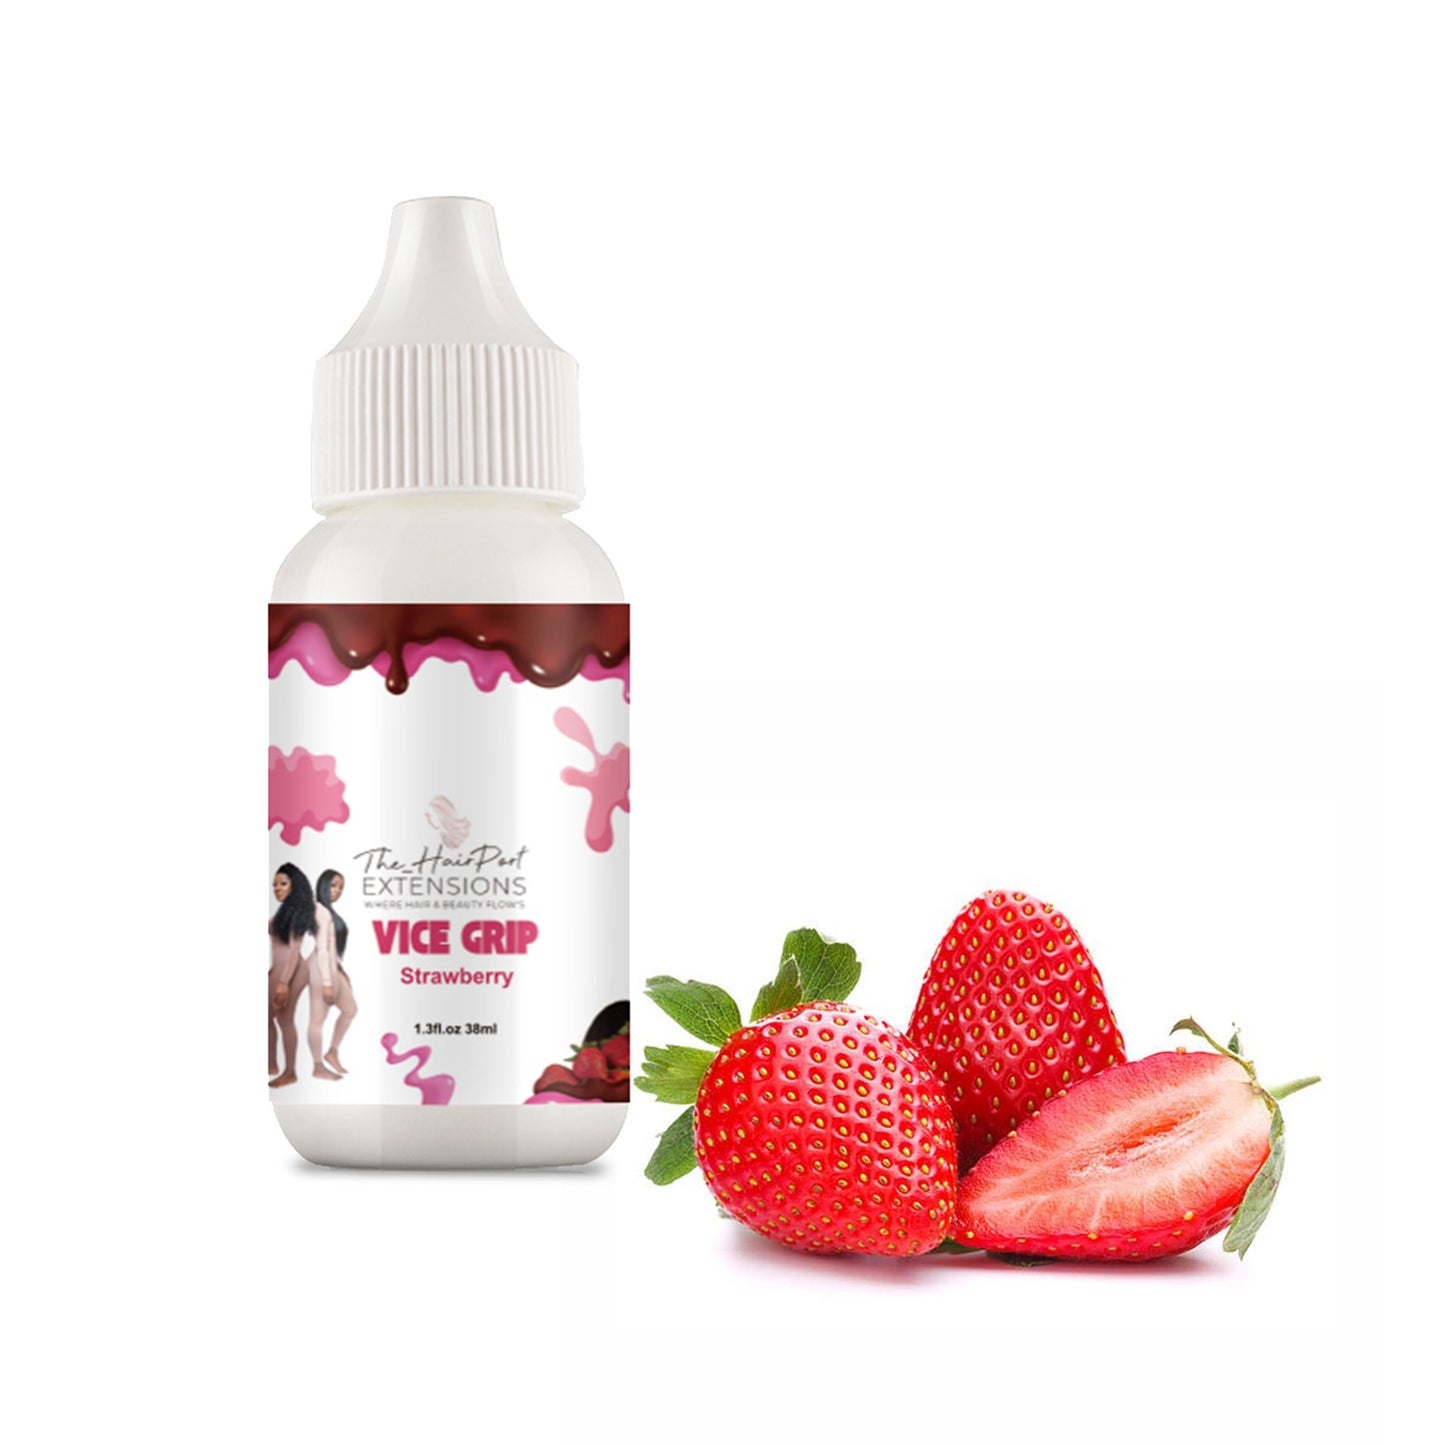 Vice grip/ Strawberry